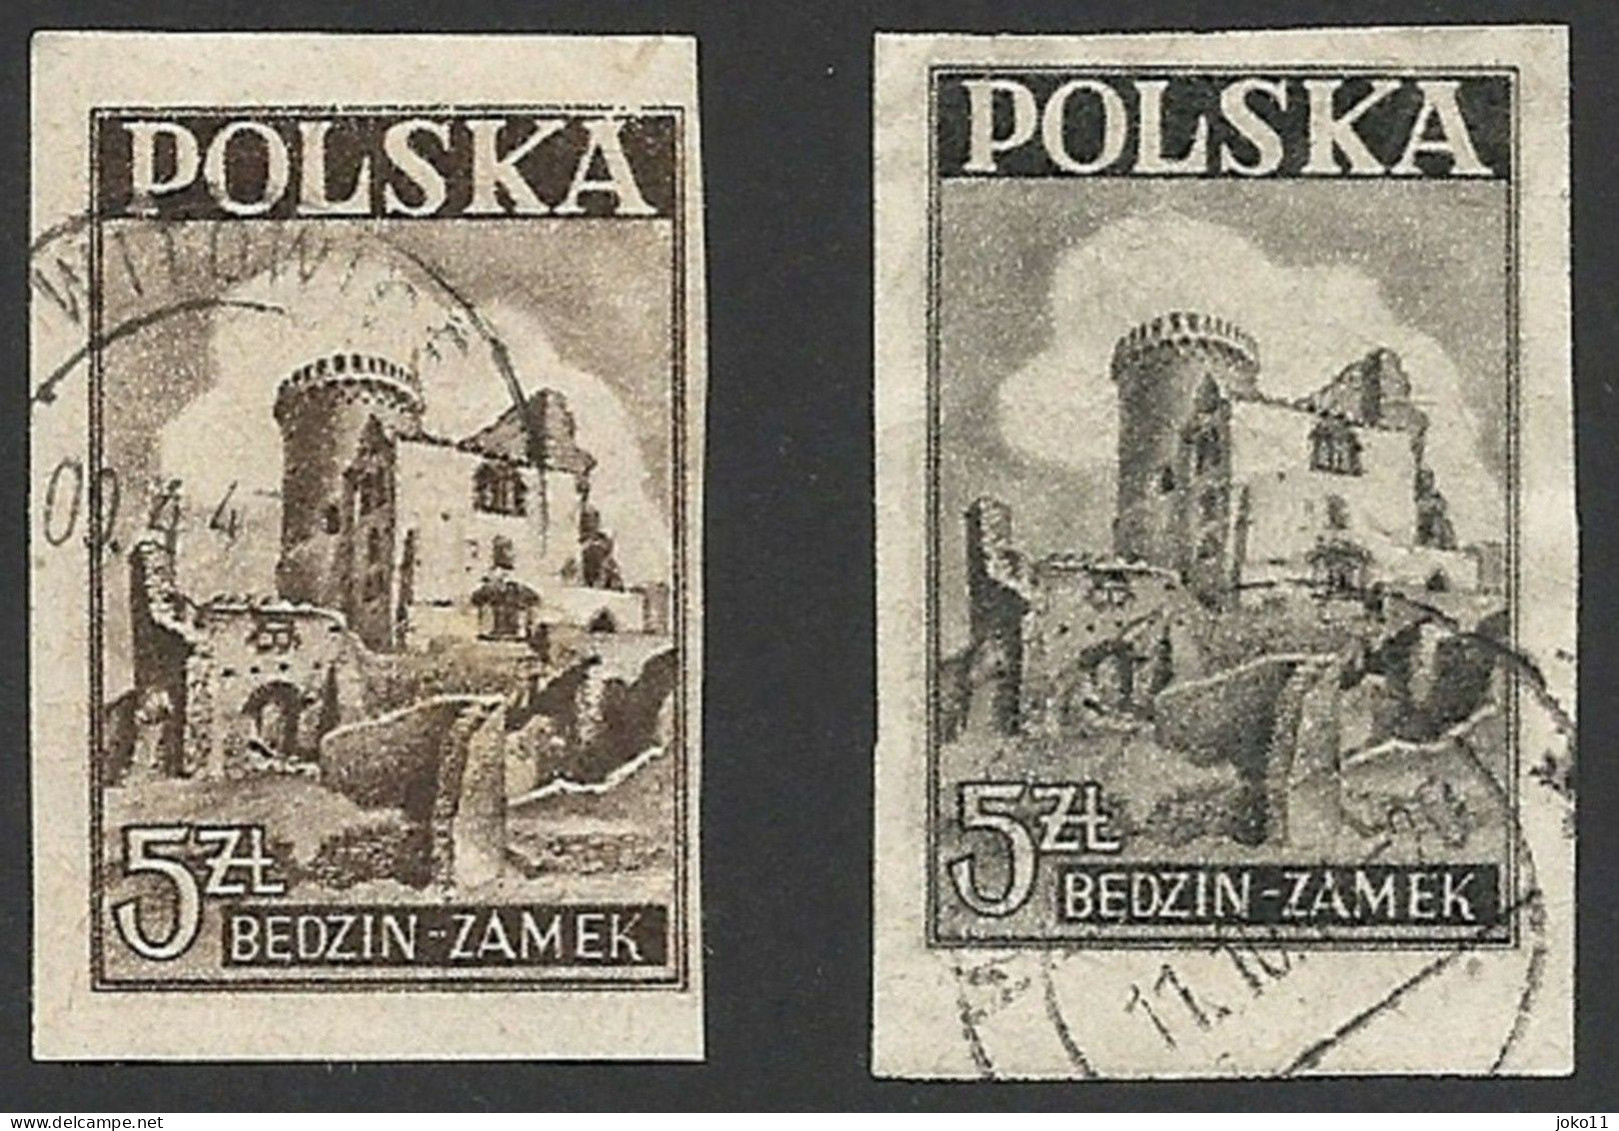 Polen 1946, Mi.-Nr. 441 A+b, Gestempelt - Gebraucht